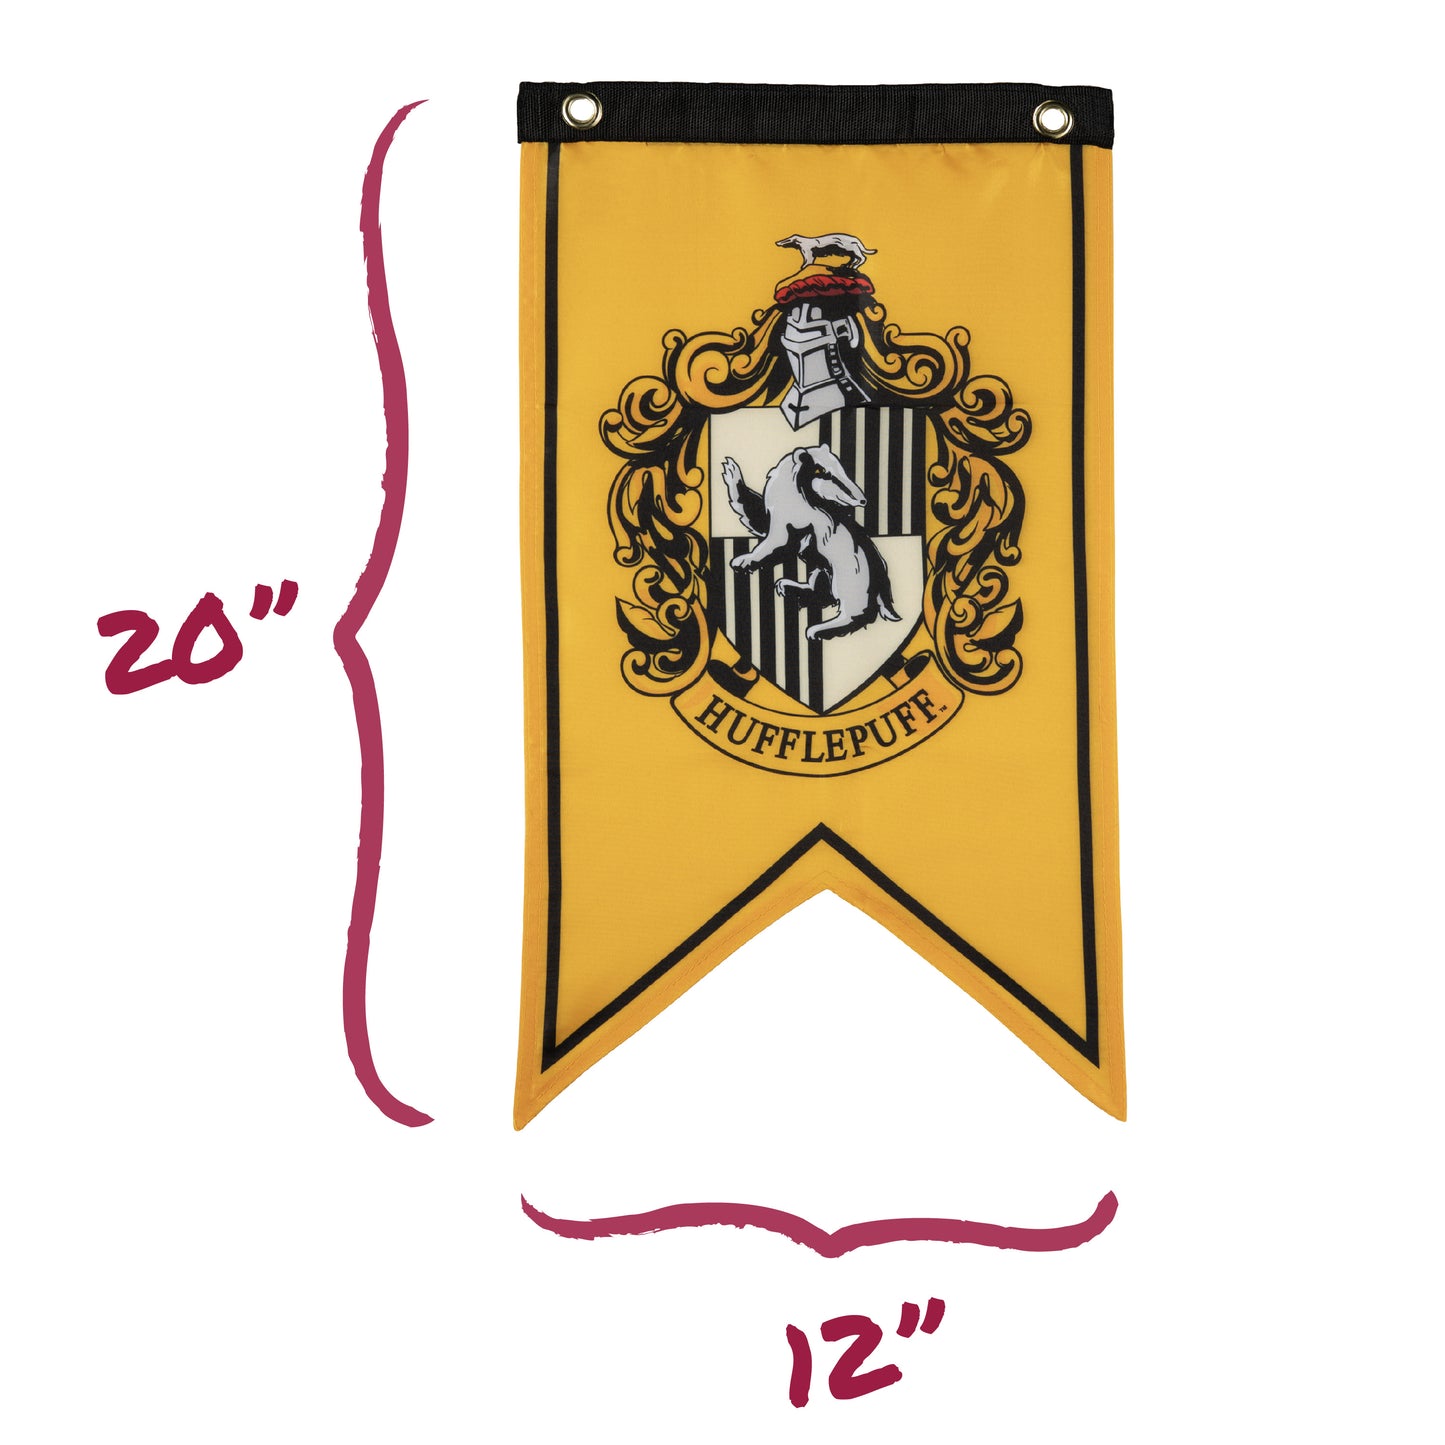 Harry Potter Wizarding House Banner Flag Set (12'' x 20'')